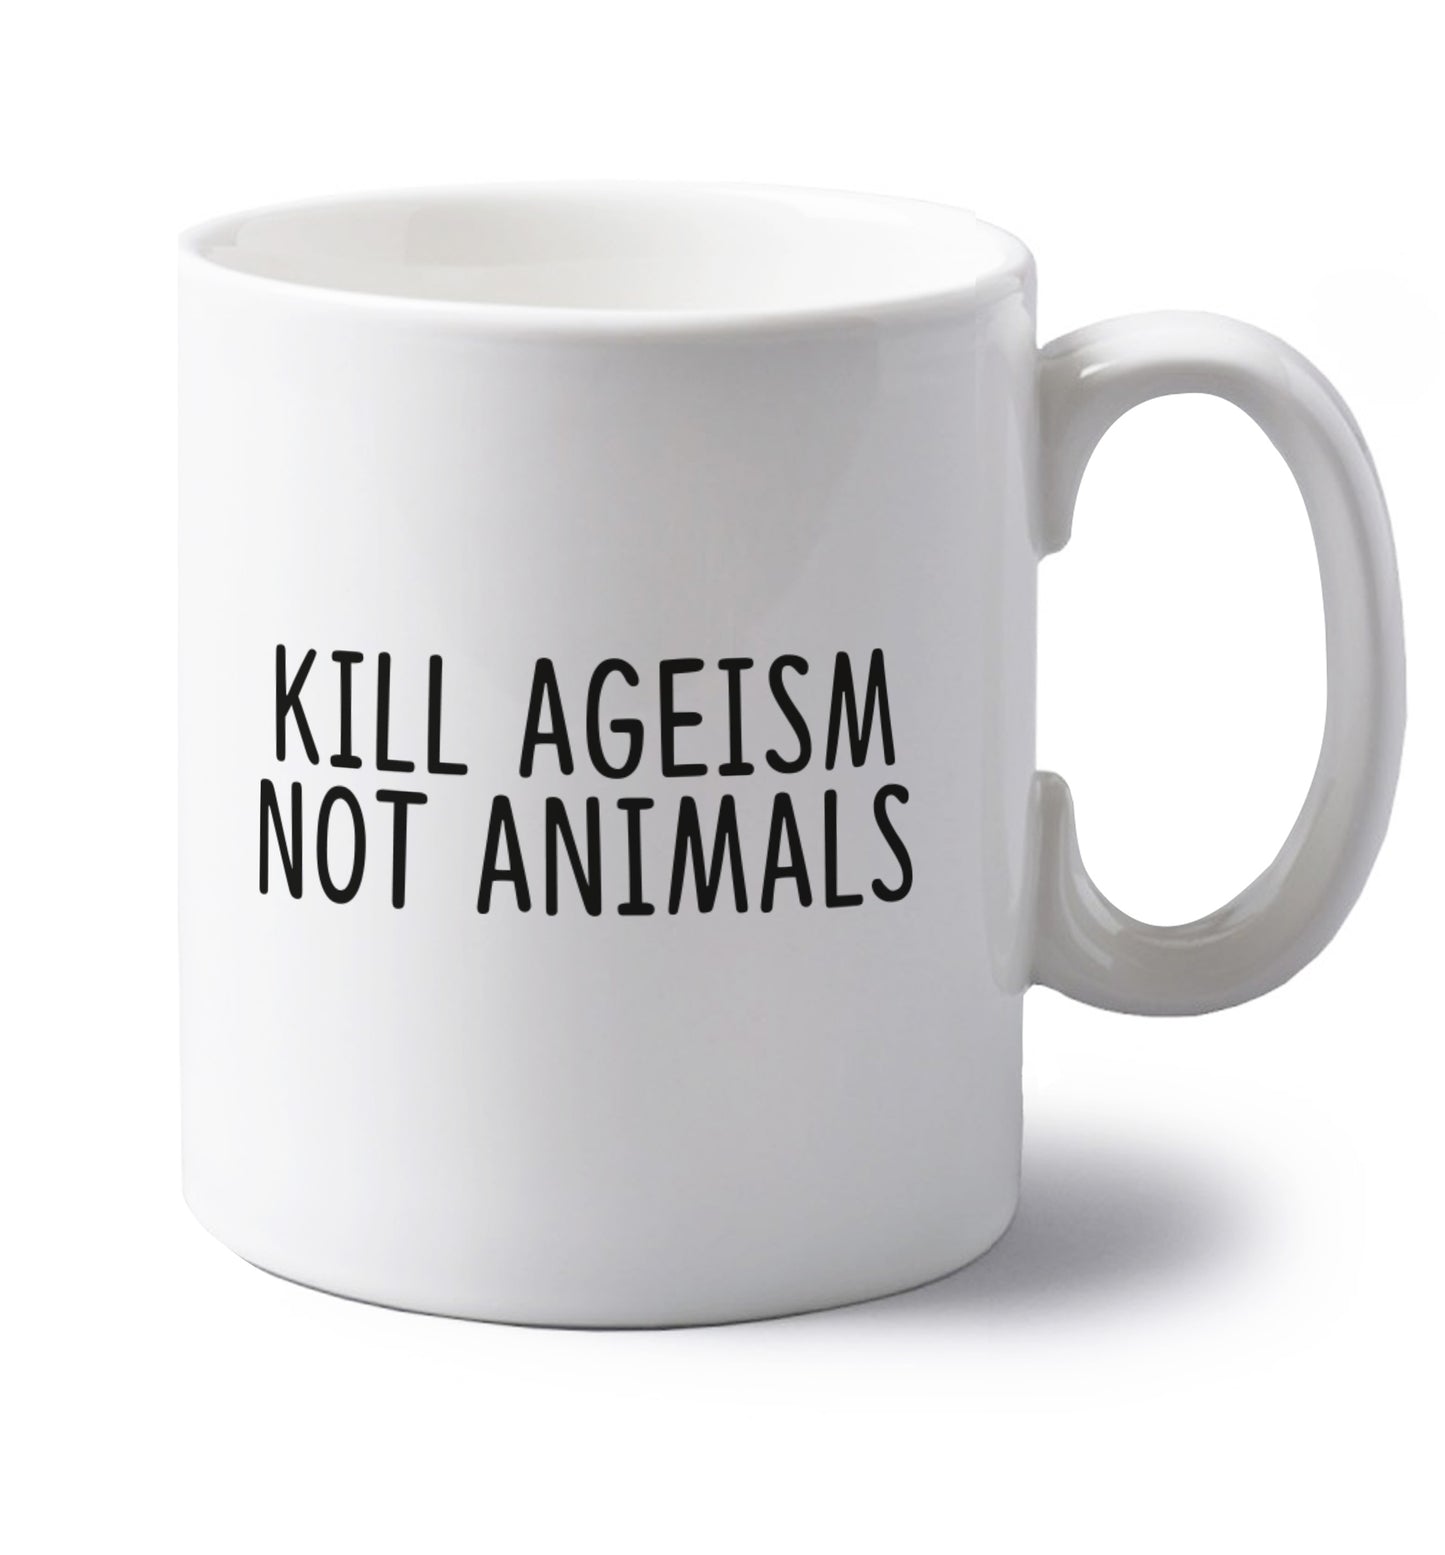 Kill Ageism Not Animals left handed white ceramic mug 